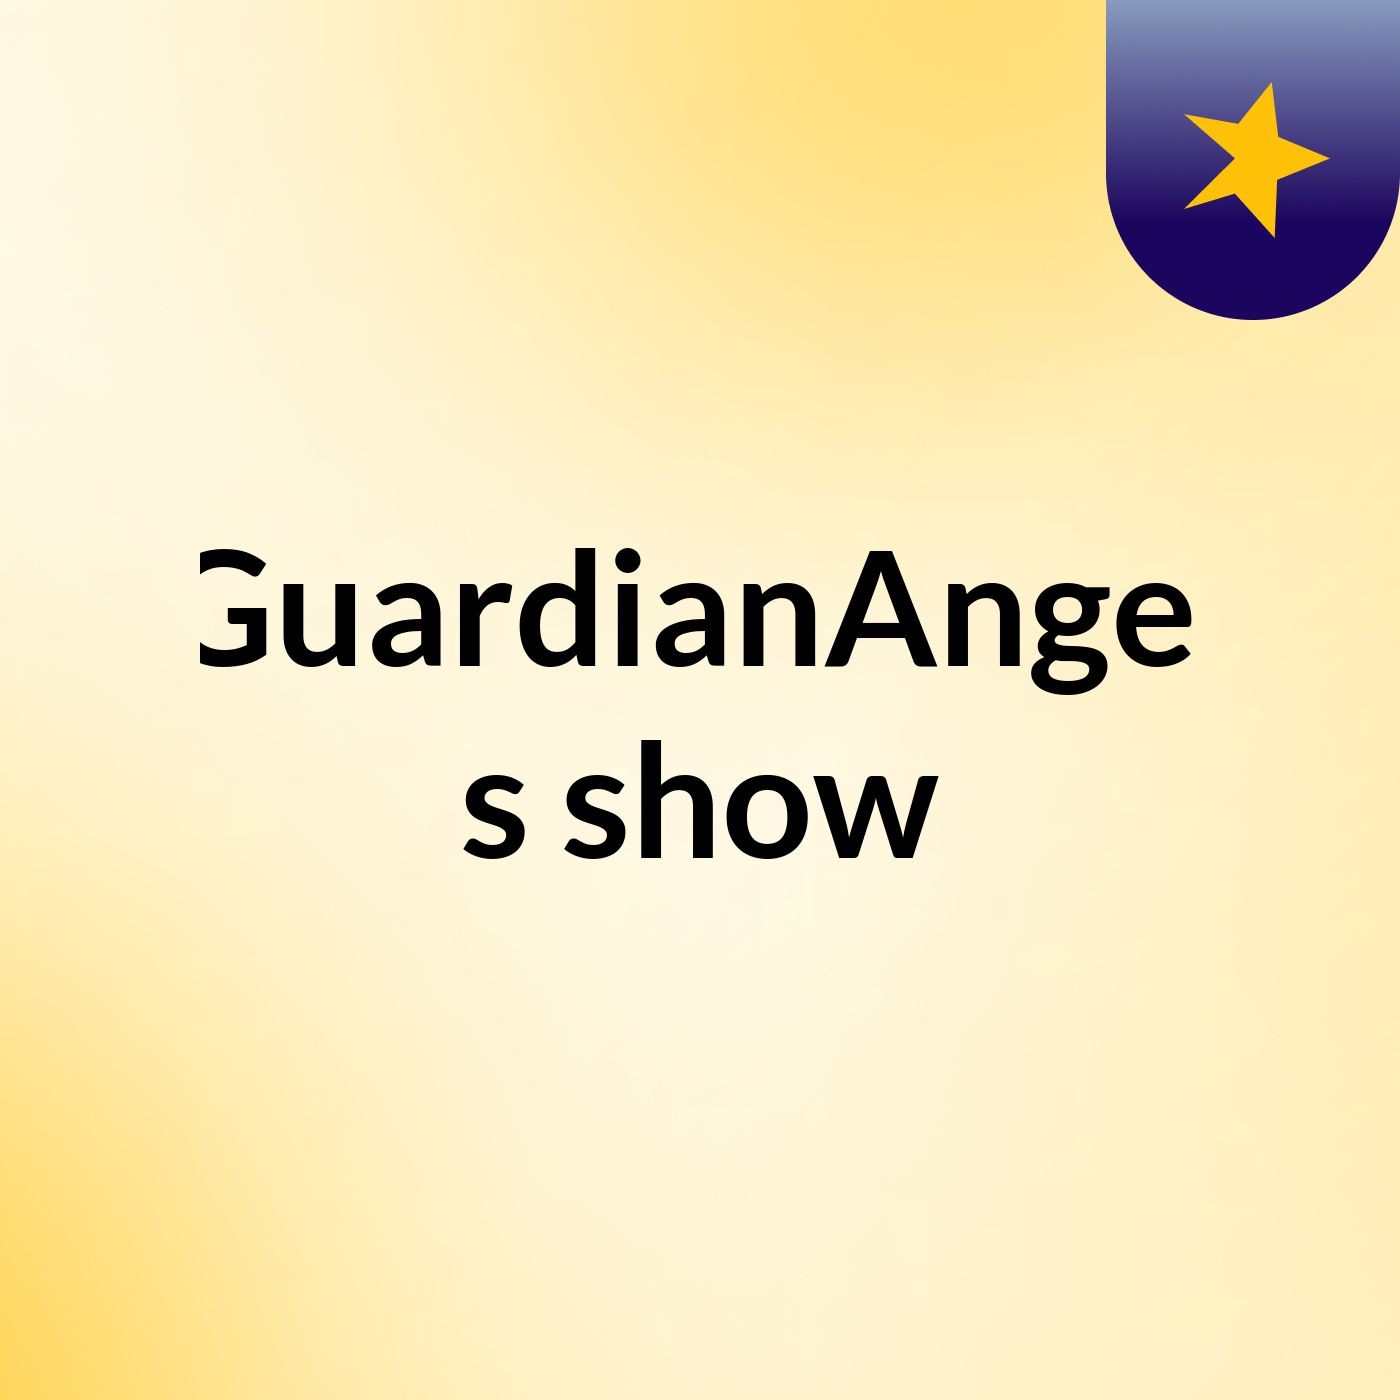 GuardianAngel's show